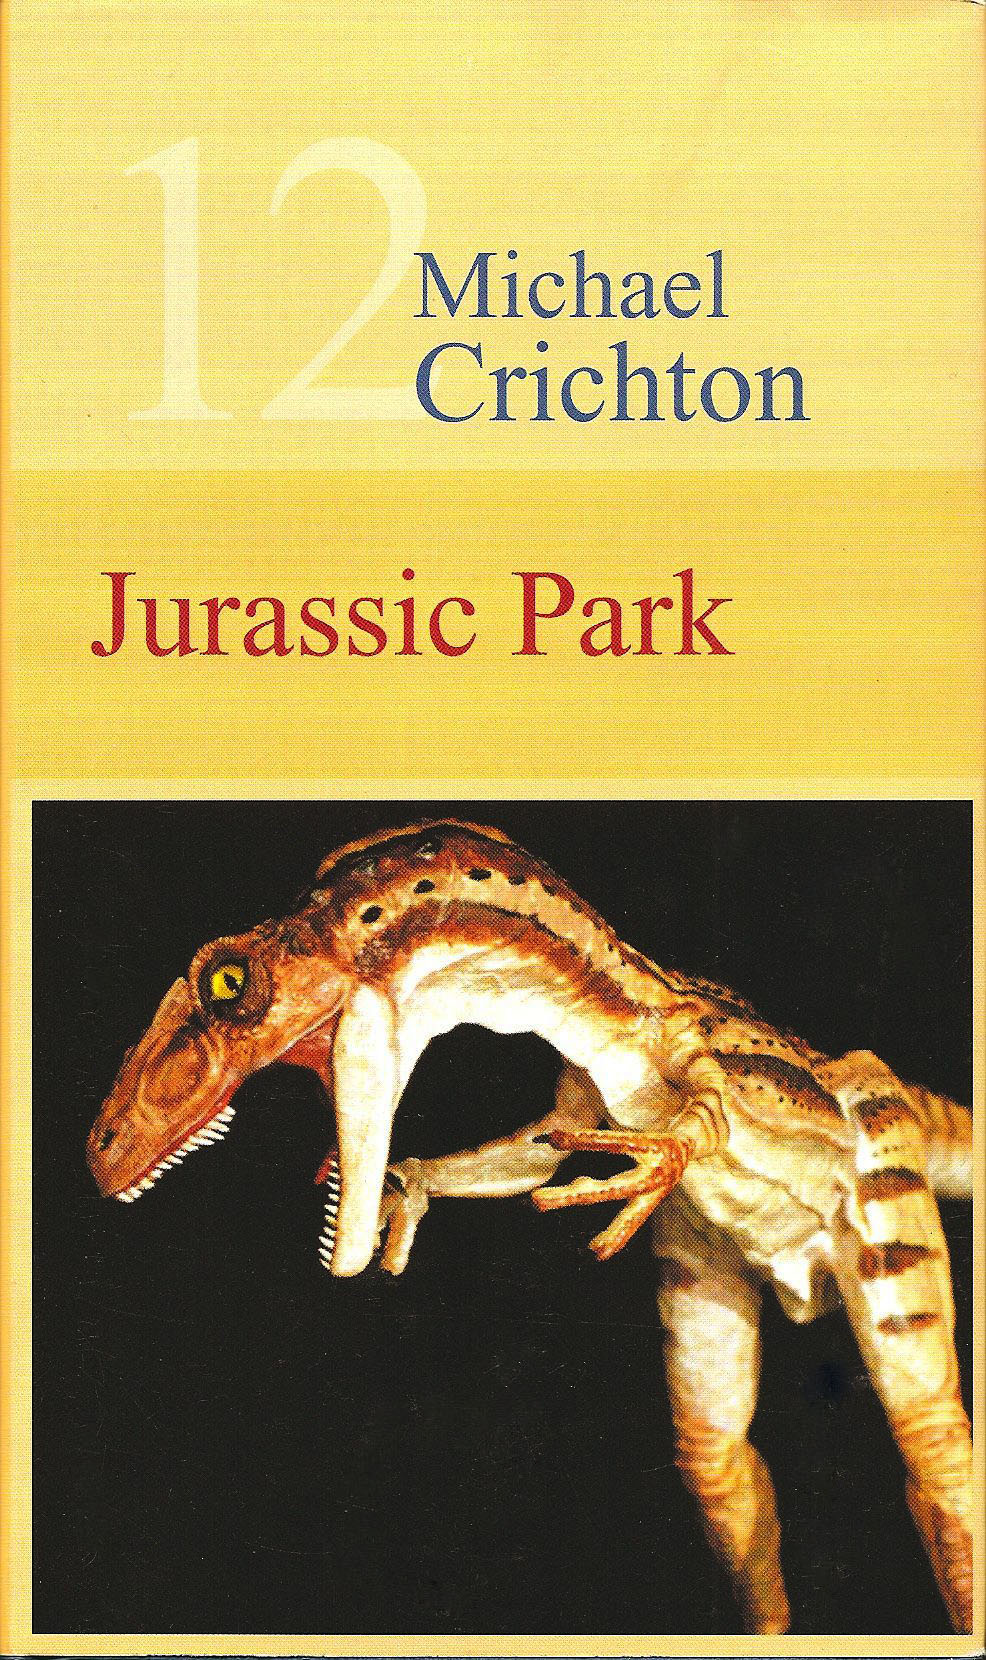 Jurassic Park
Netherlands – 1992